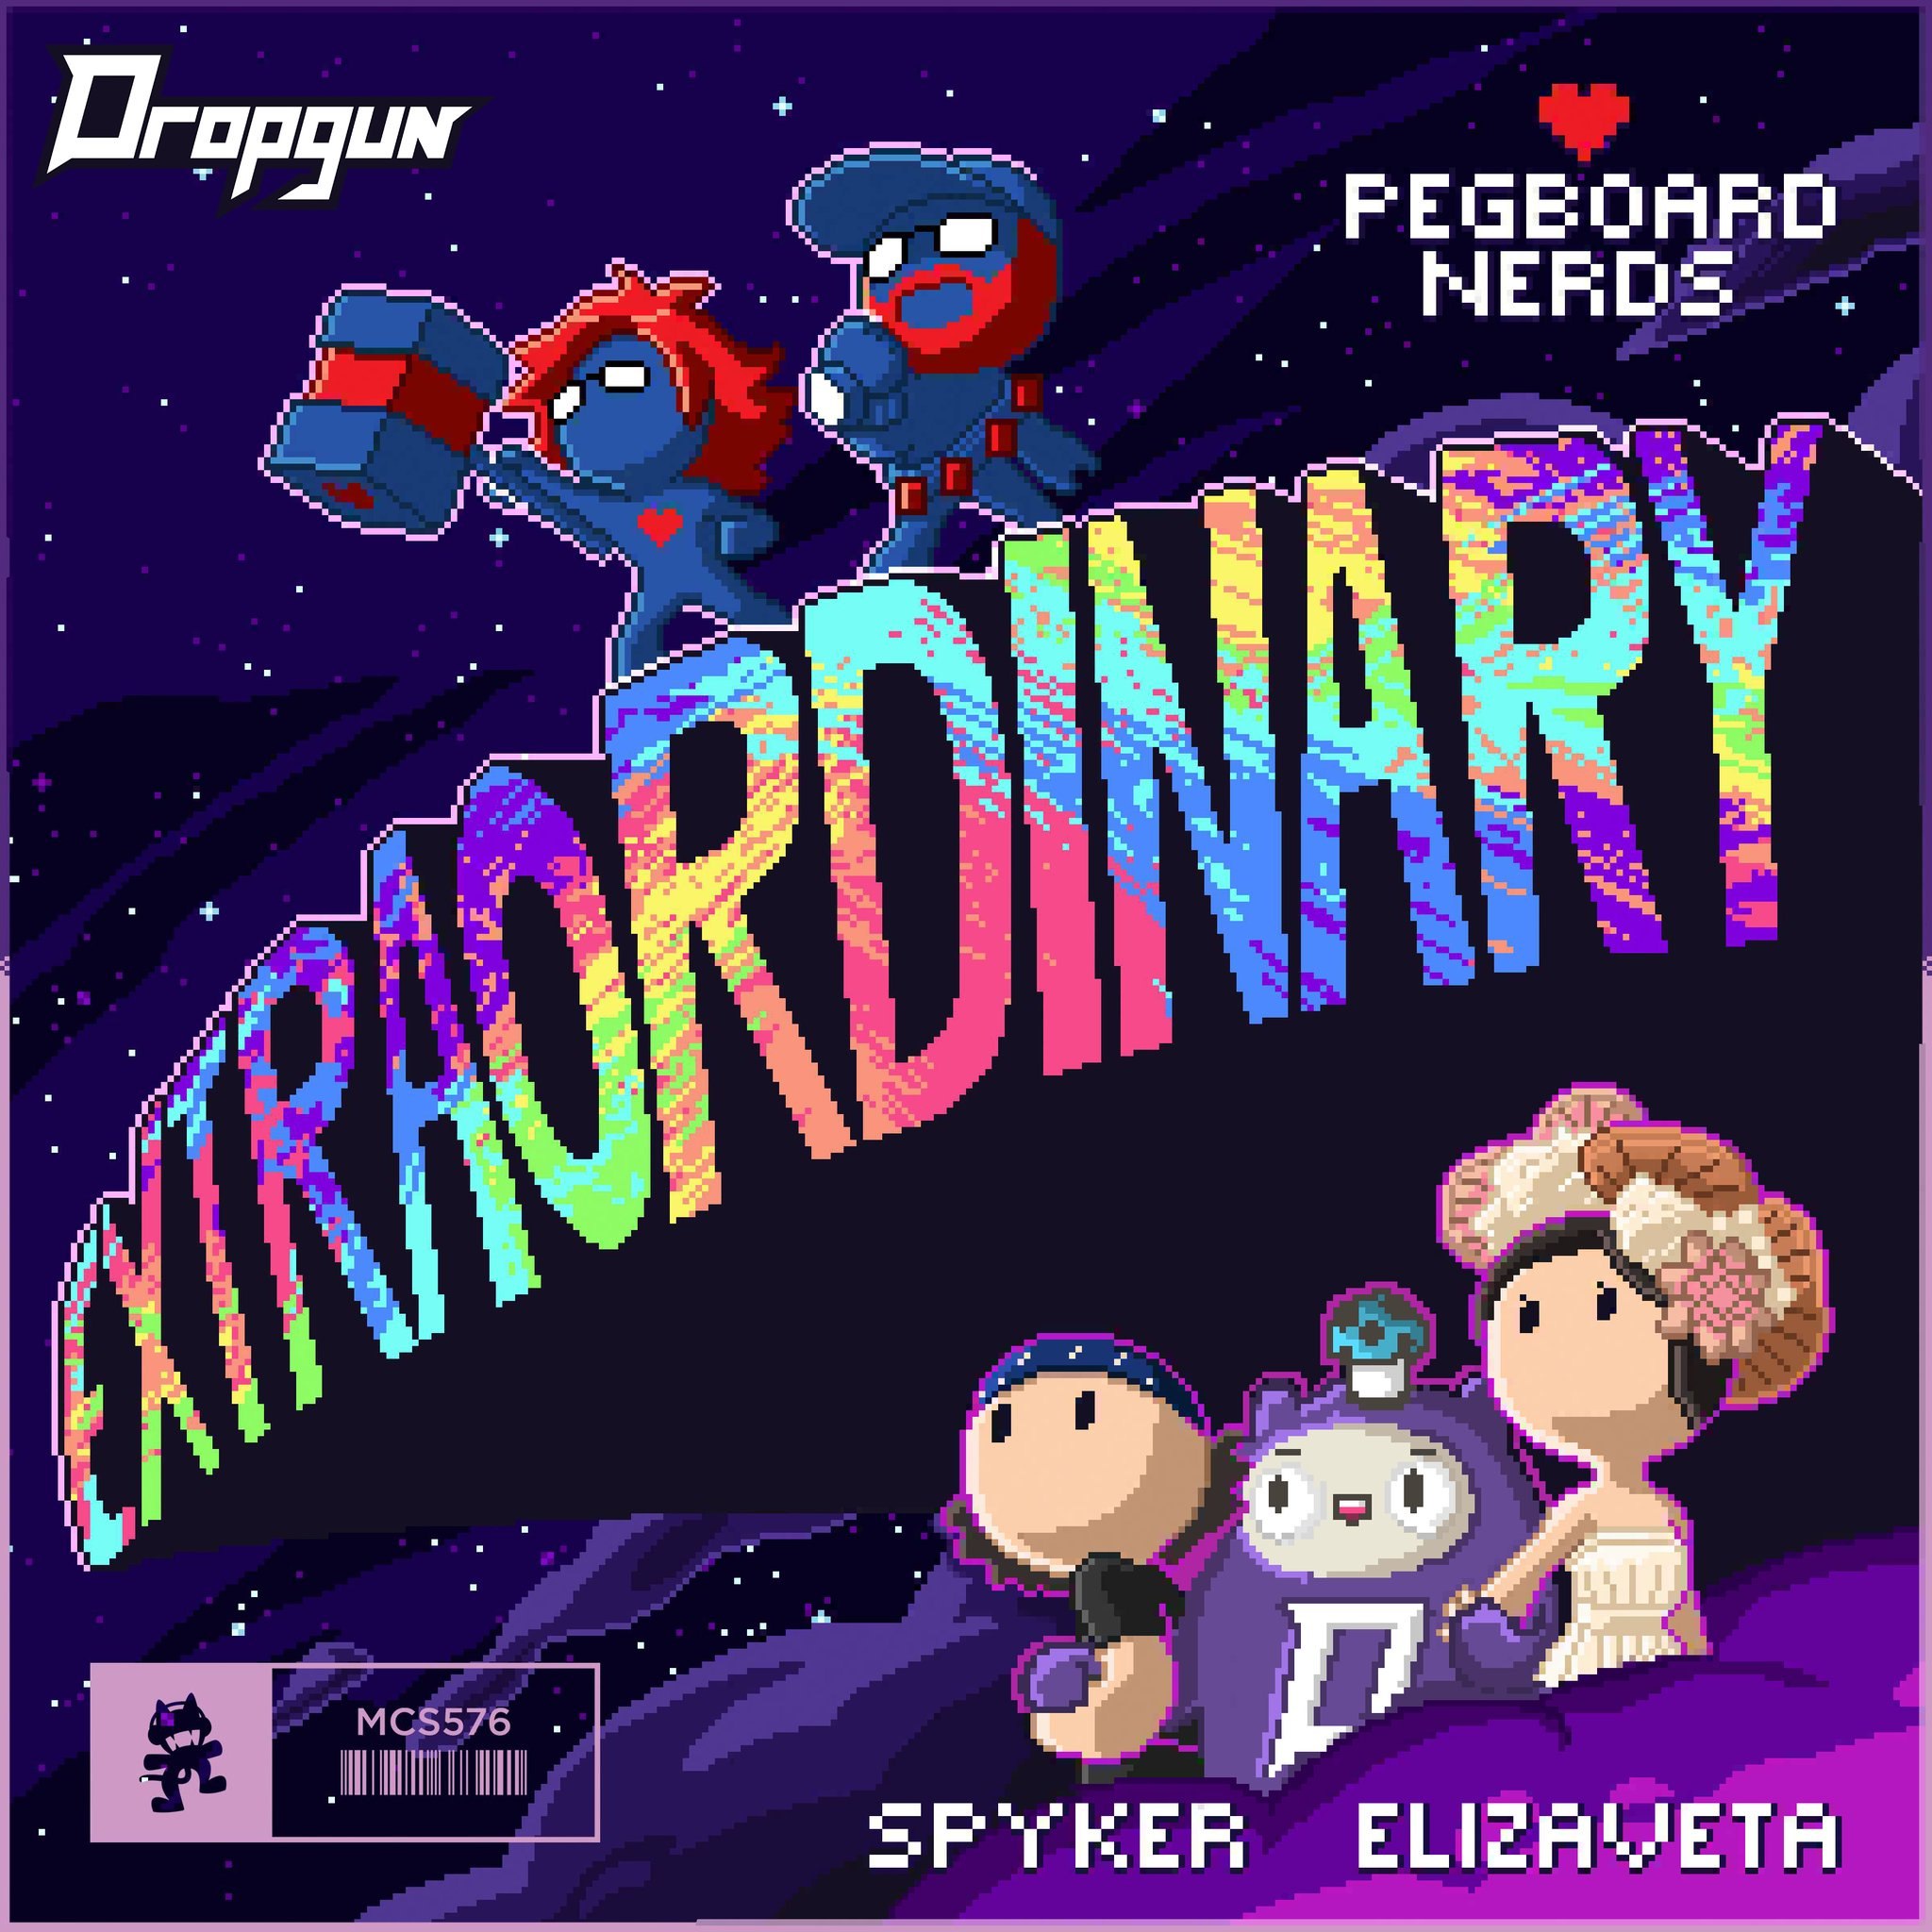 Pegboard Nerds & Spyker featuring Elizaveta — Extraordinary (Dropgun Remix) cover artwork